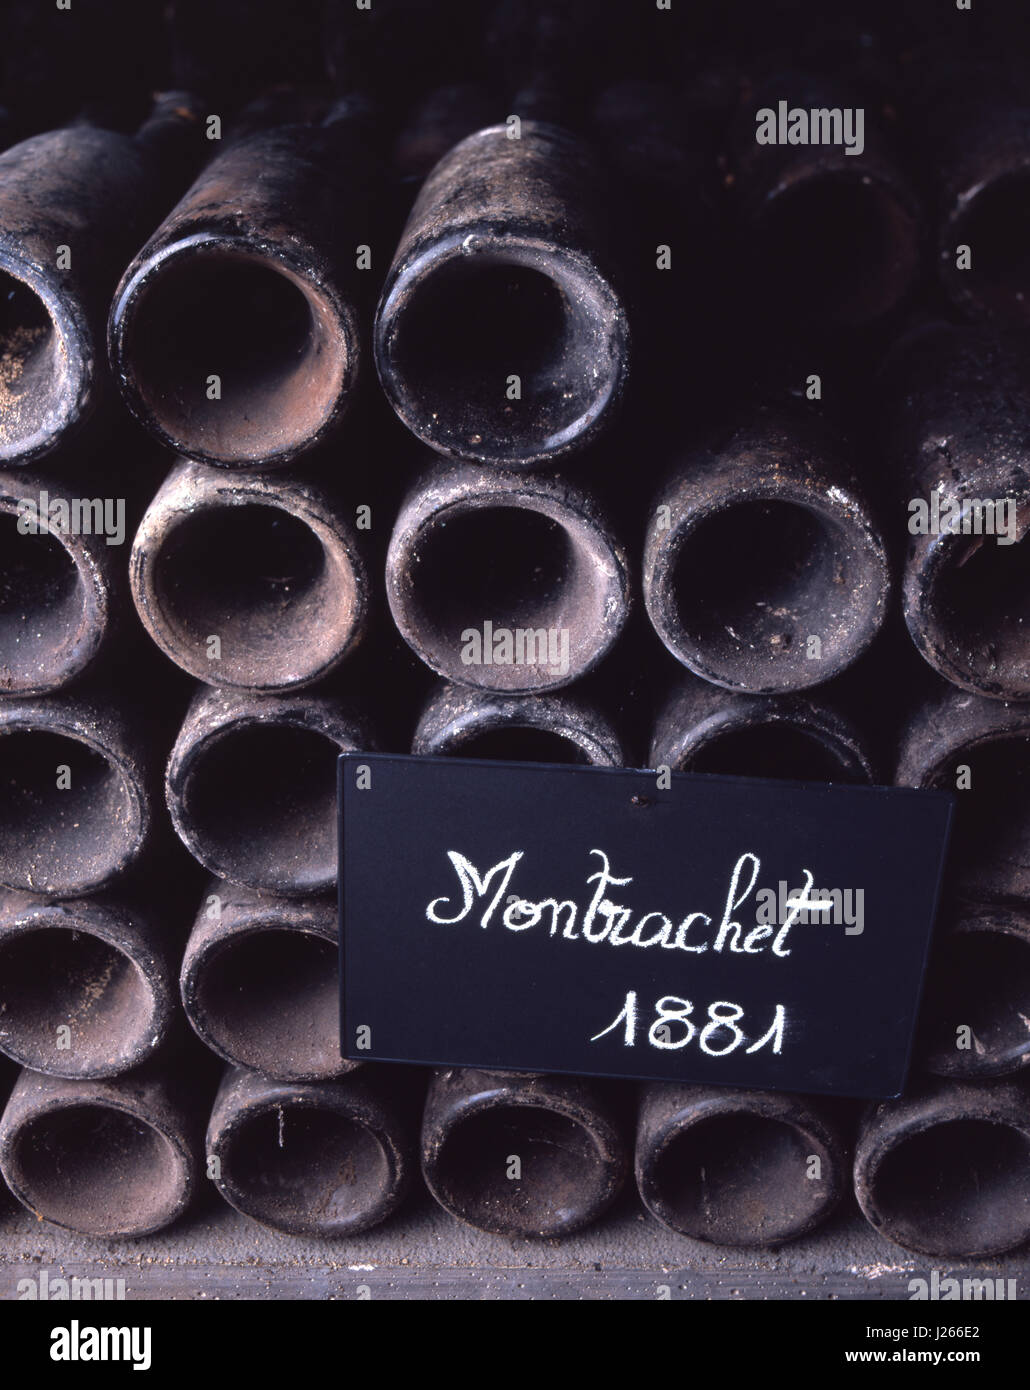 Montrachet 1881 vecchio rari polverose bottiglie regolarmente ri-corked e degustati nelle cantine di Louis Jadot, Beaune, Borgogna, Côte d'Or, Francia. Foto Stock